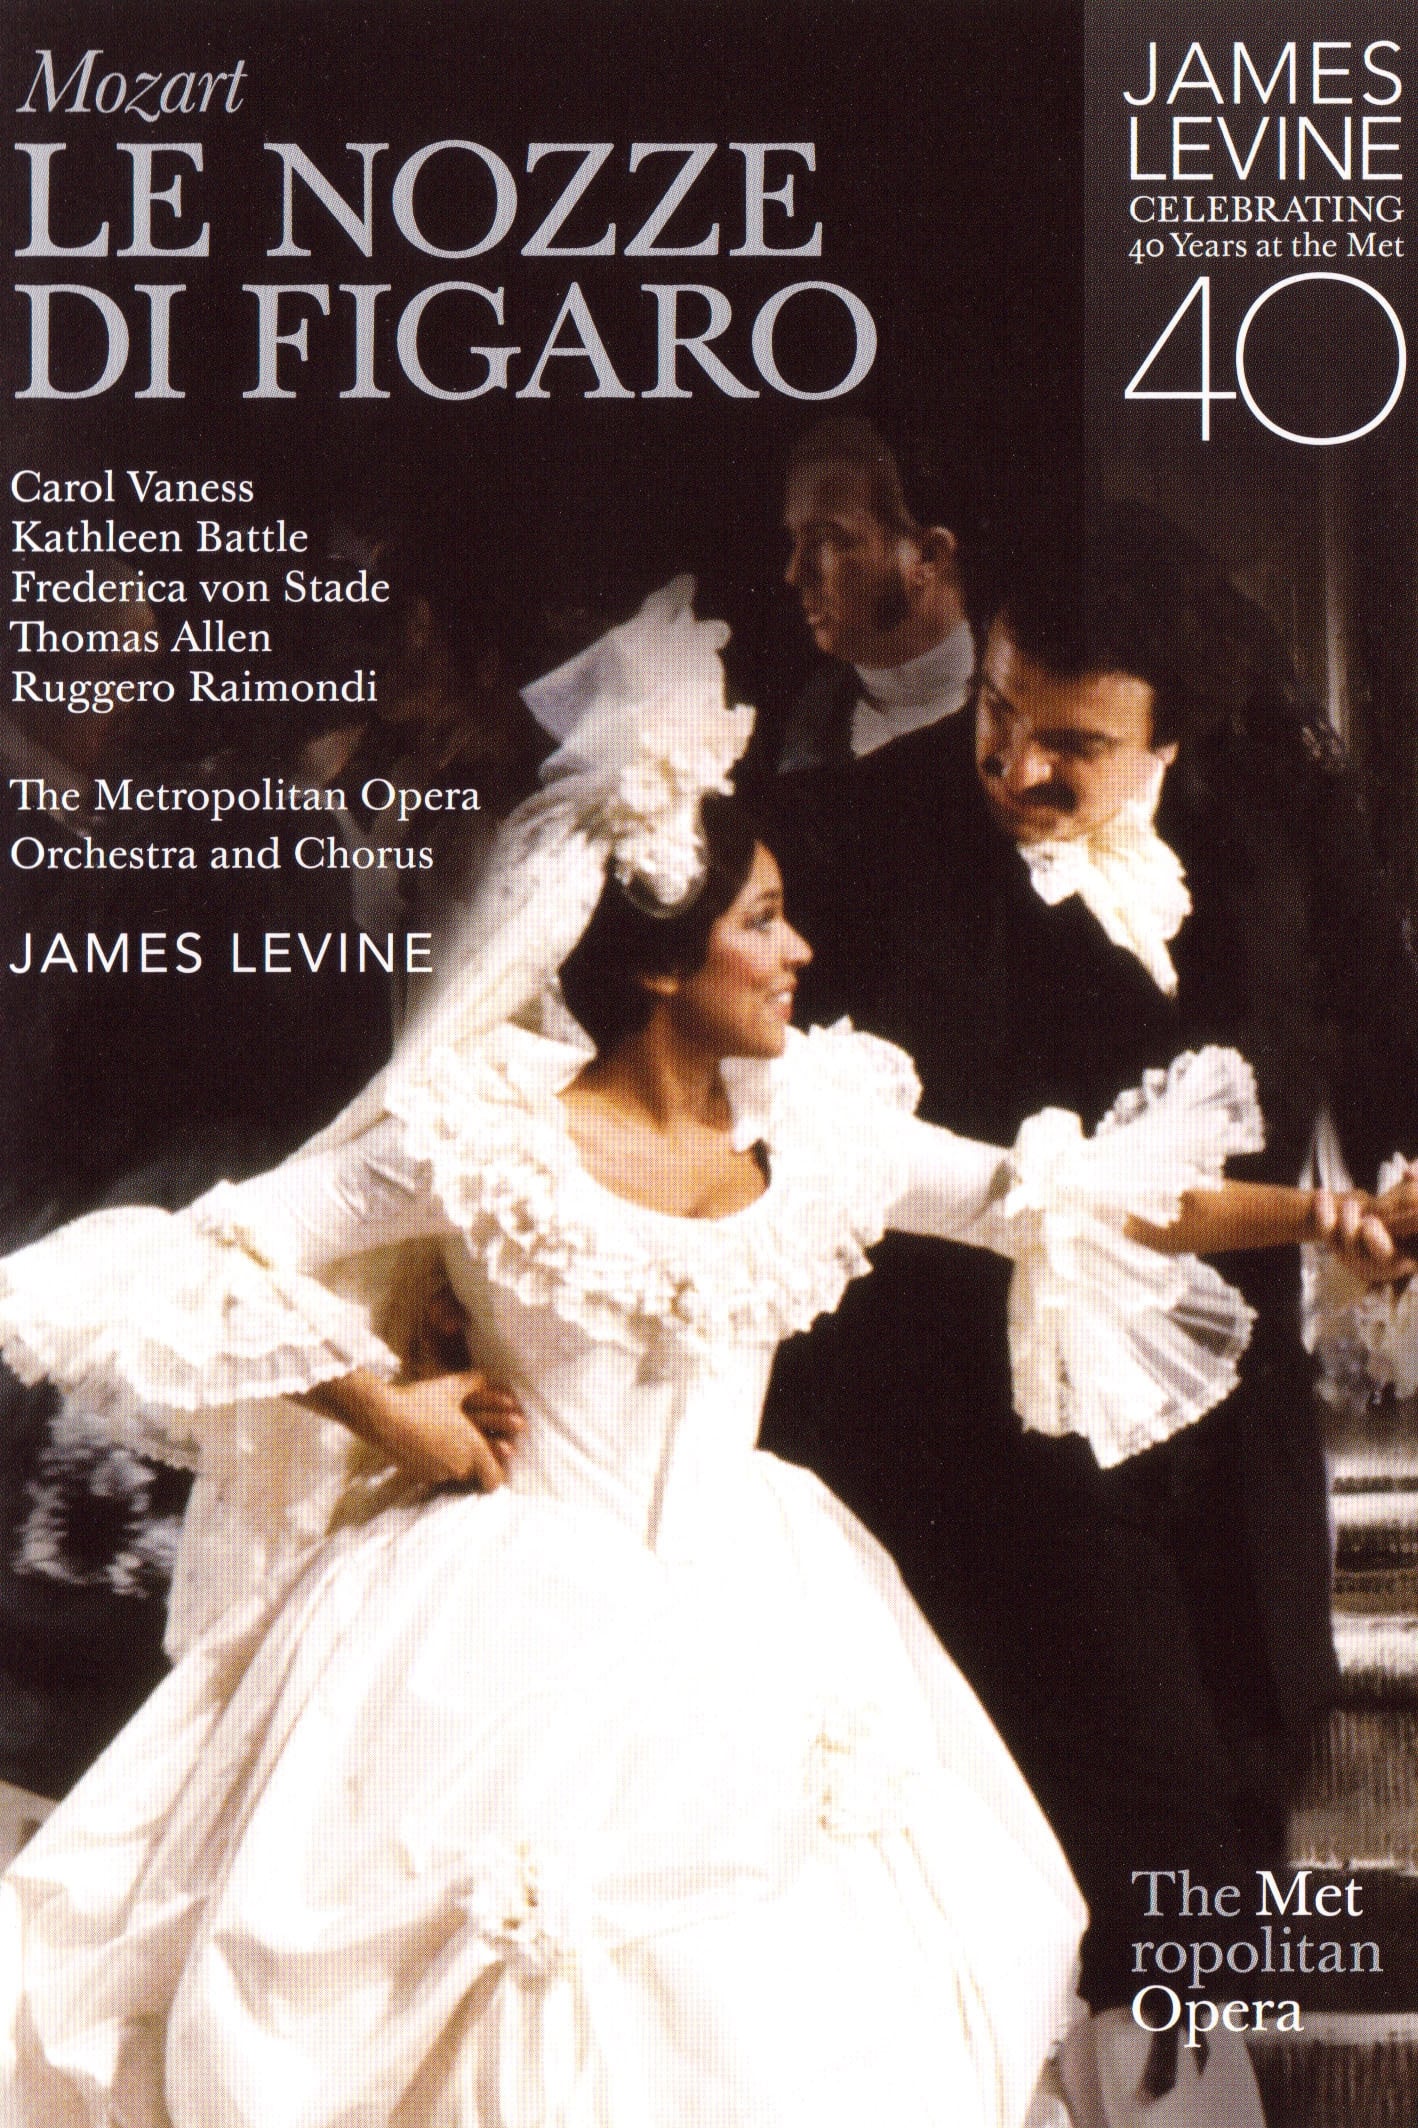 Le Nozze di Figaro - The Met (1985)